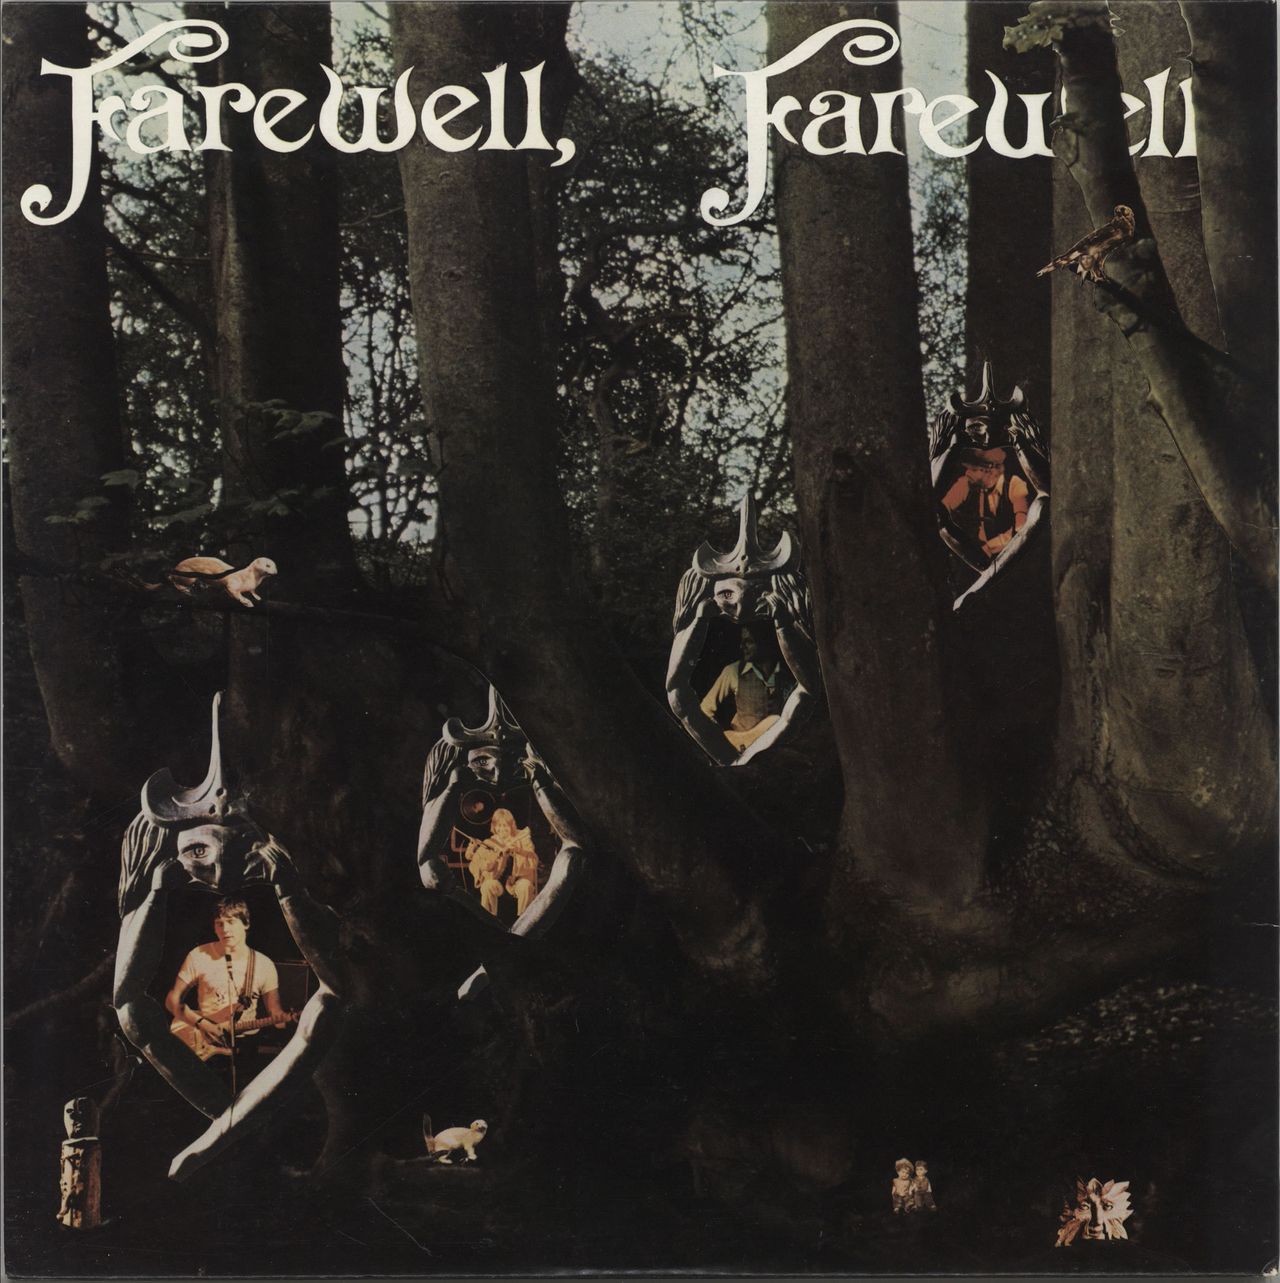 Fairport Convention Farewell Farewell UK vinyl LP album (LP record)